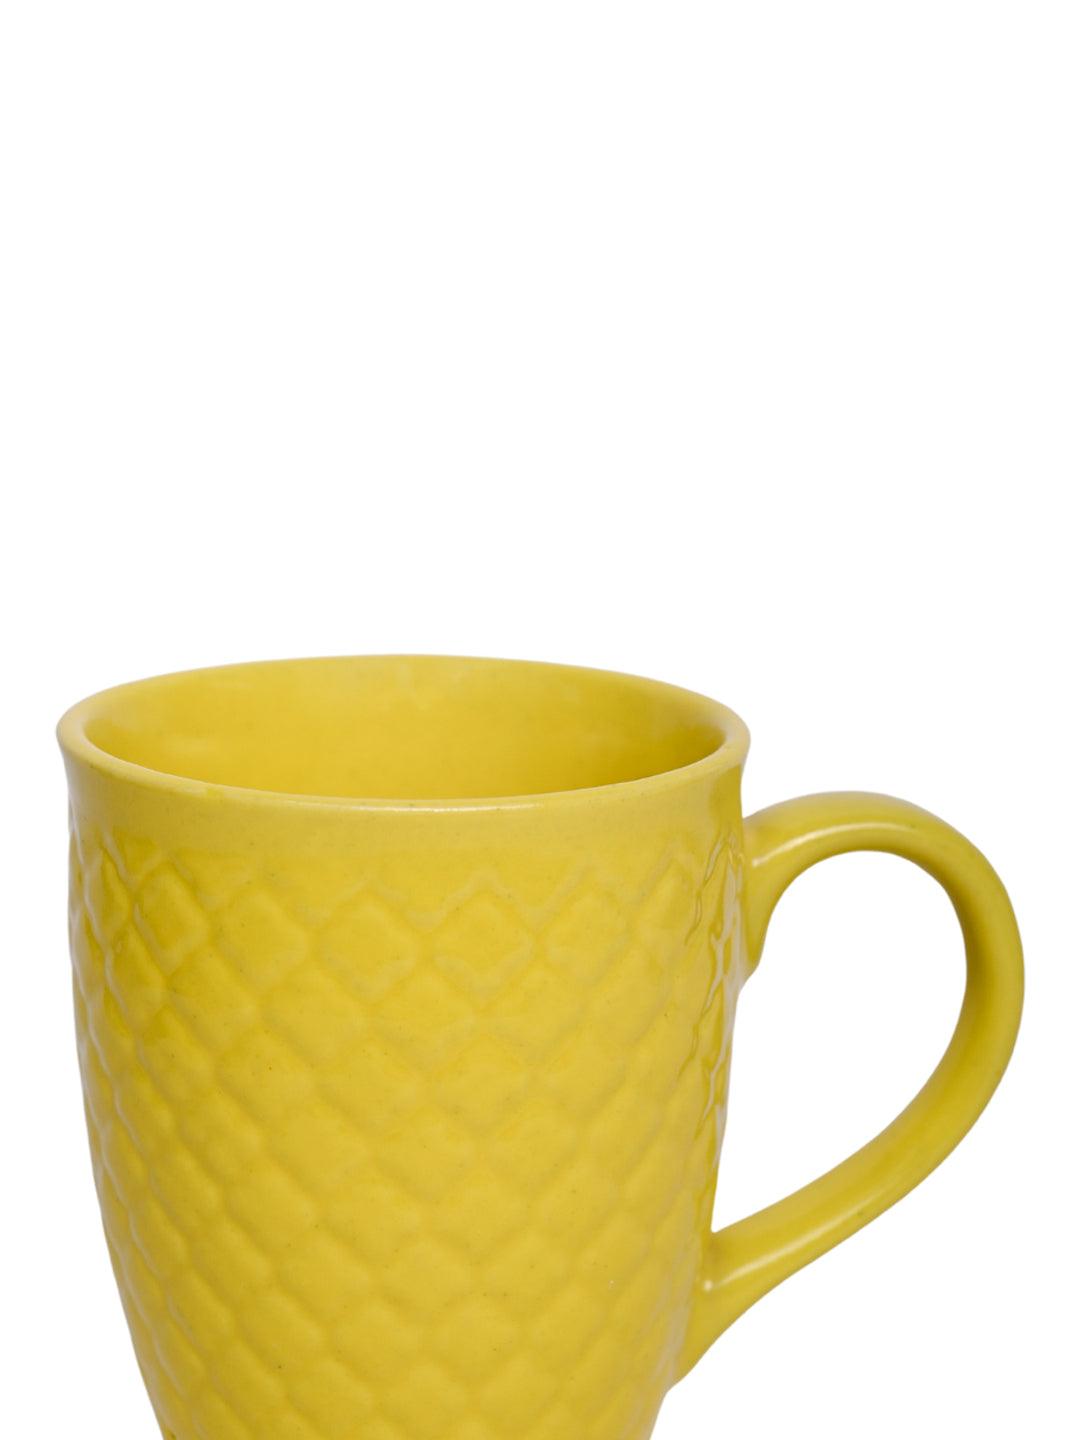 Buy VON CASA Ceramic Coffee Mug - 320 Ml, Red at the best price on